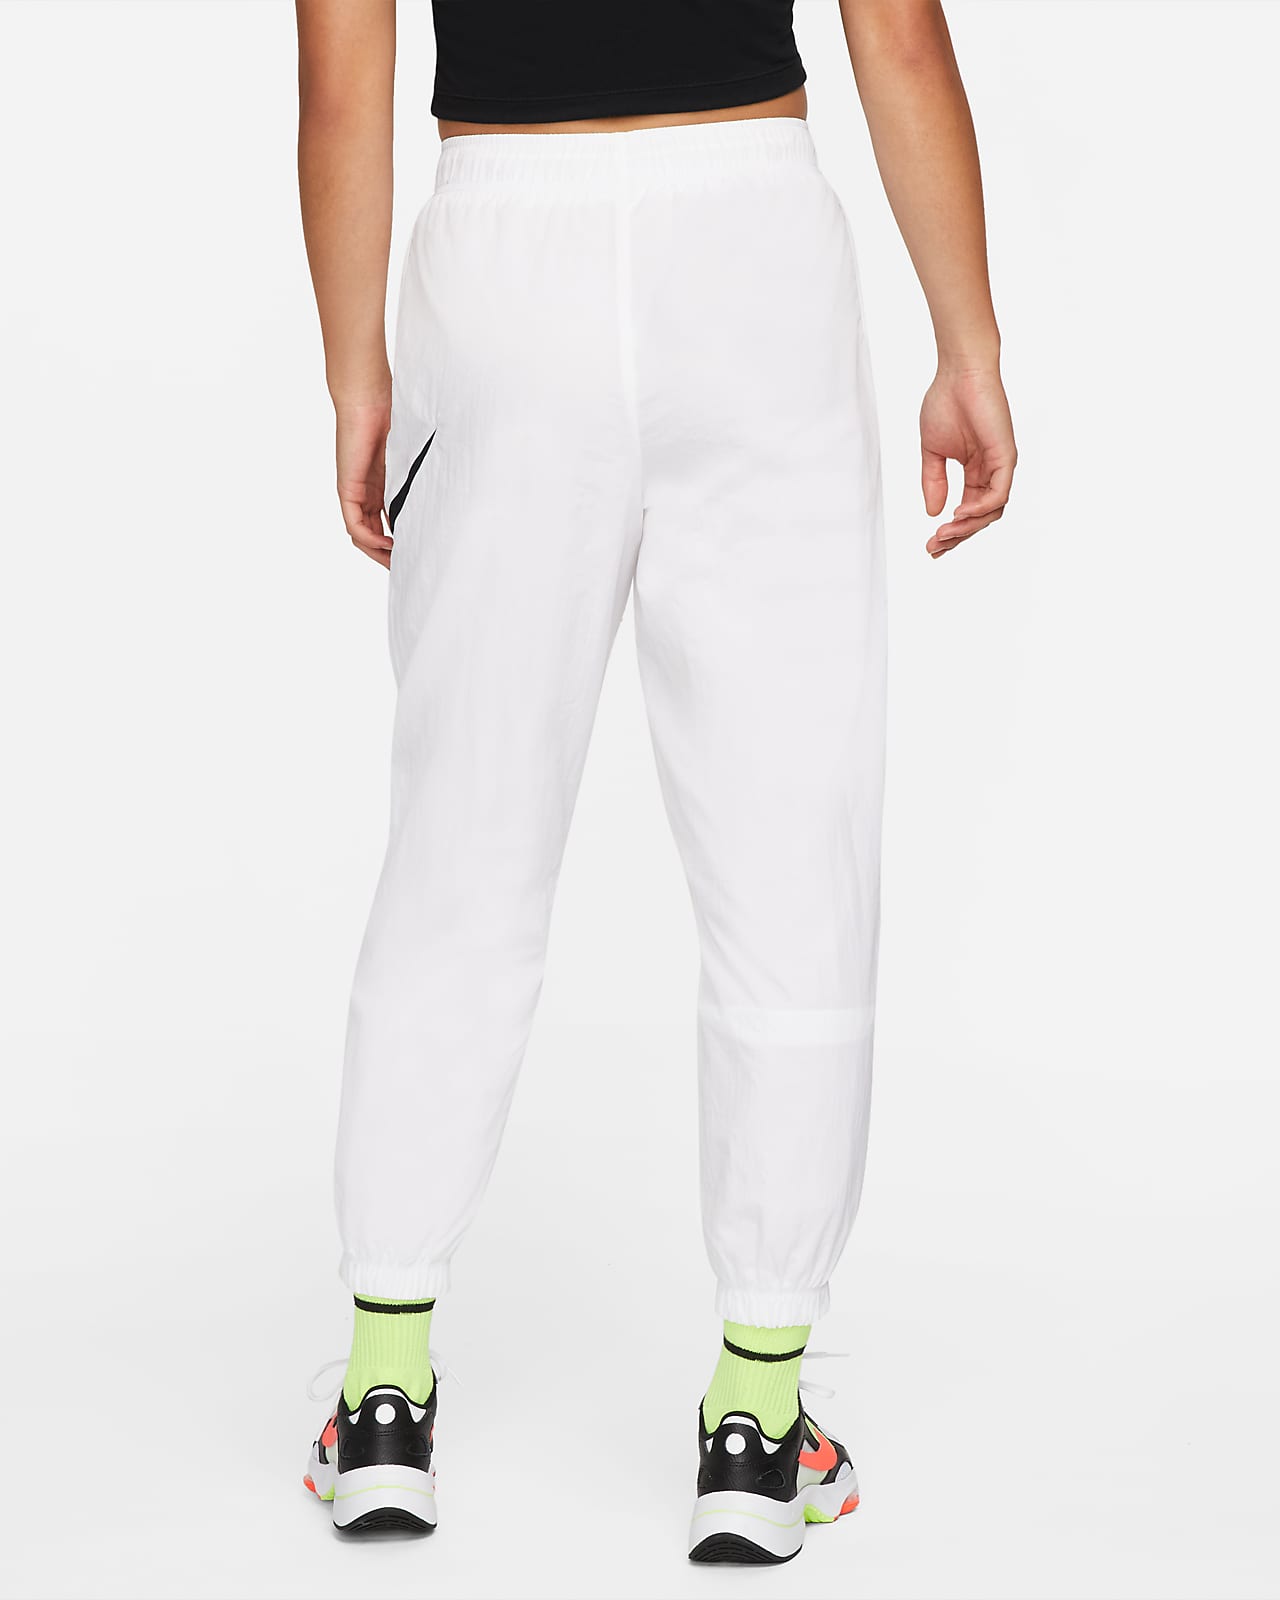 Buy now Wrogn Mens white slim fit midrise trousers WROGN by Virat Kohli  WQTR4003S